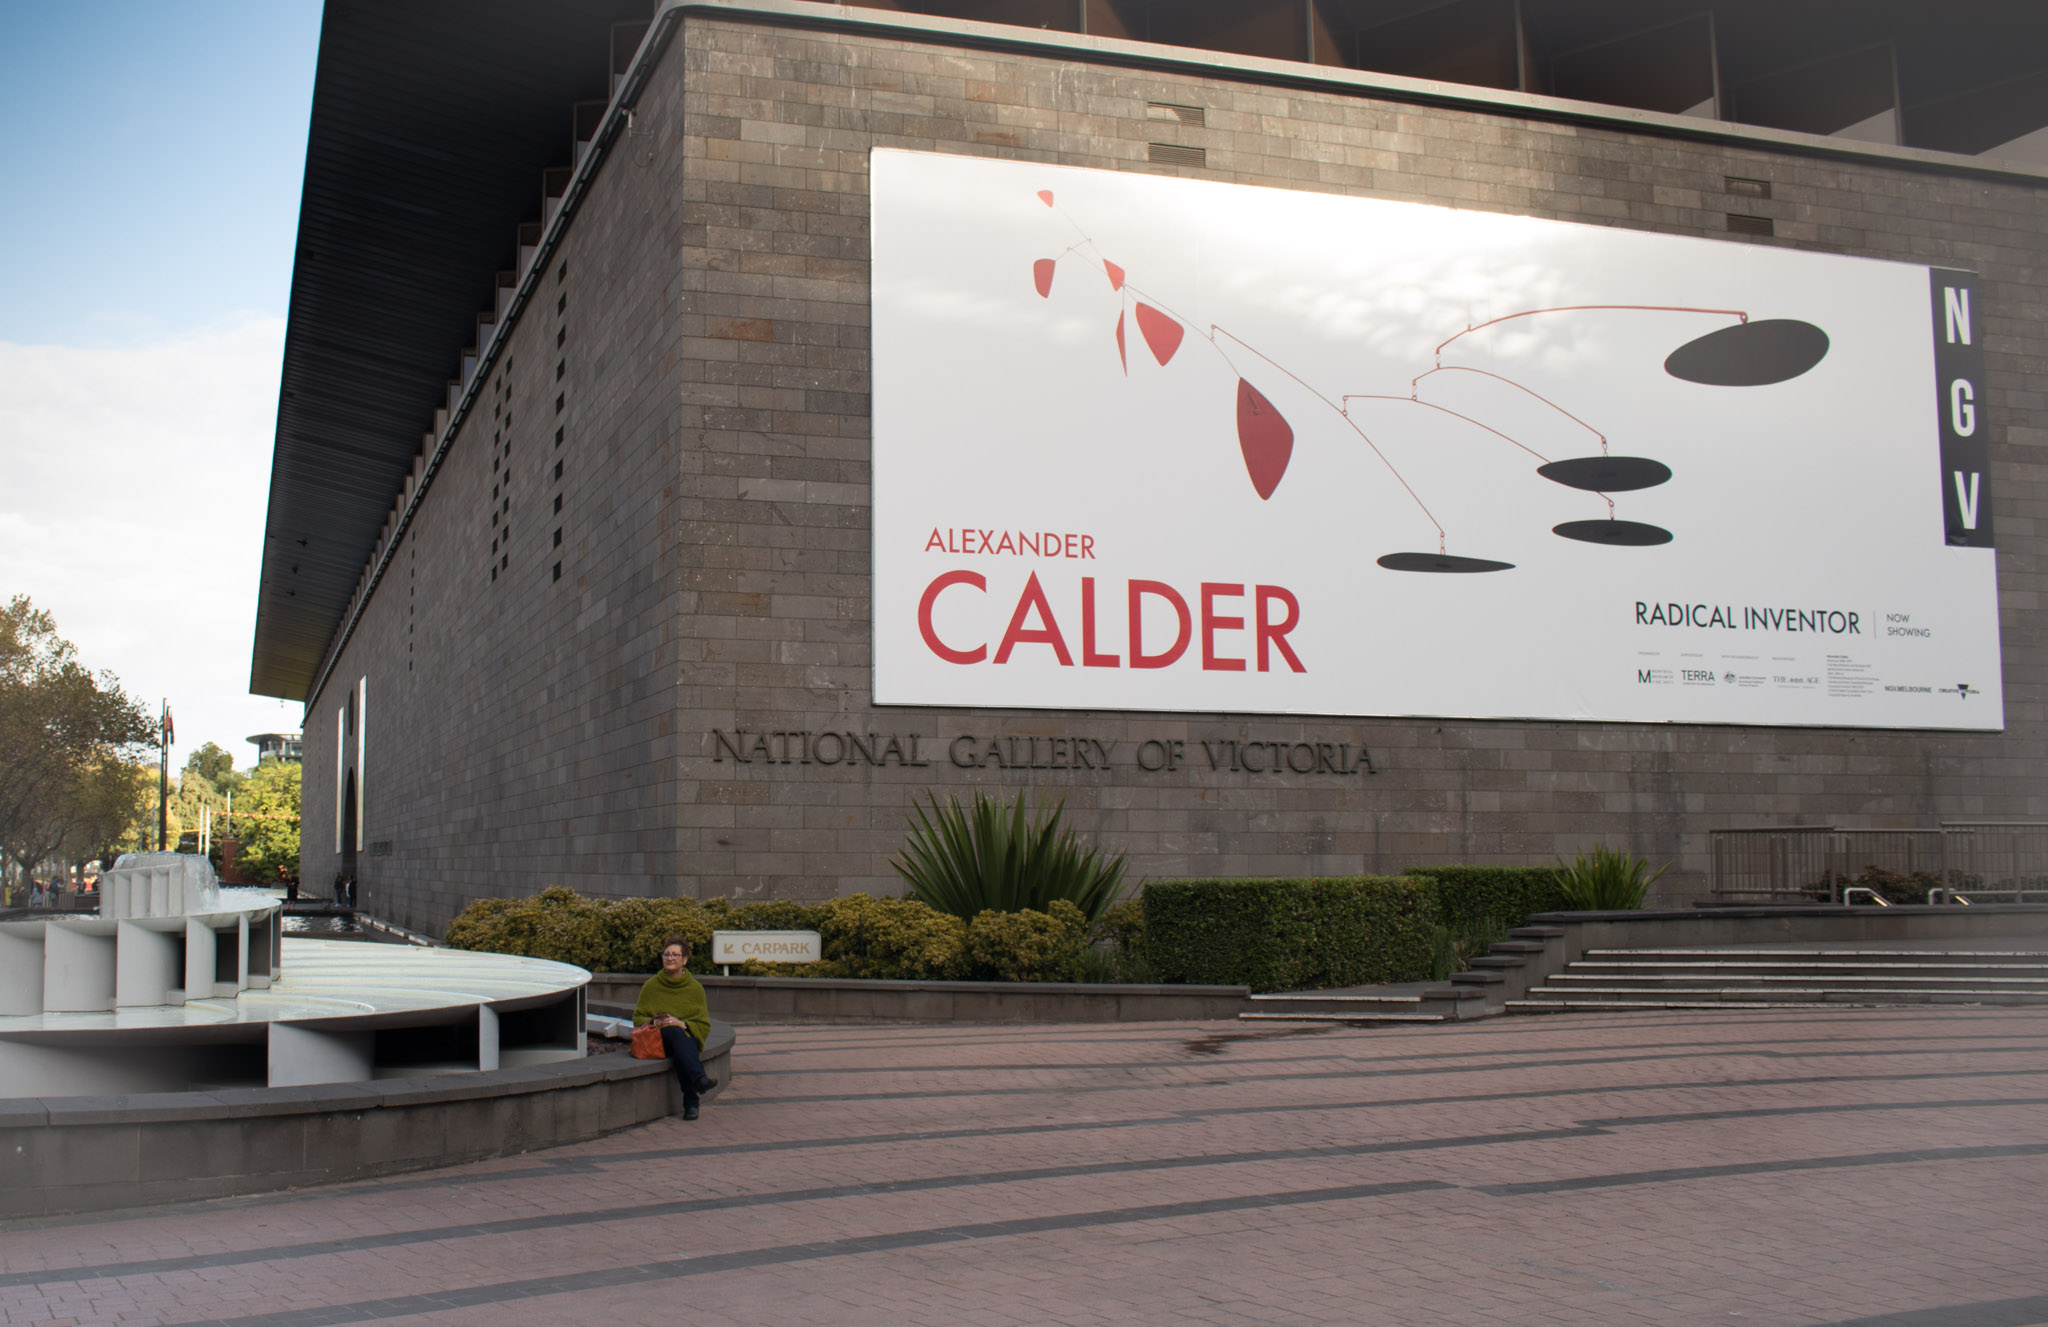 wideshot view of NGV with Calder poster